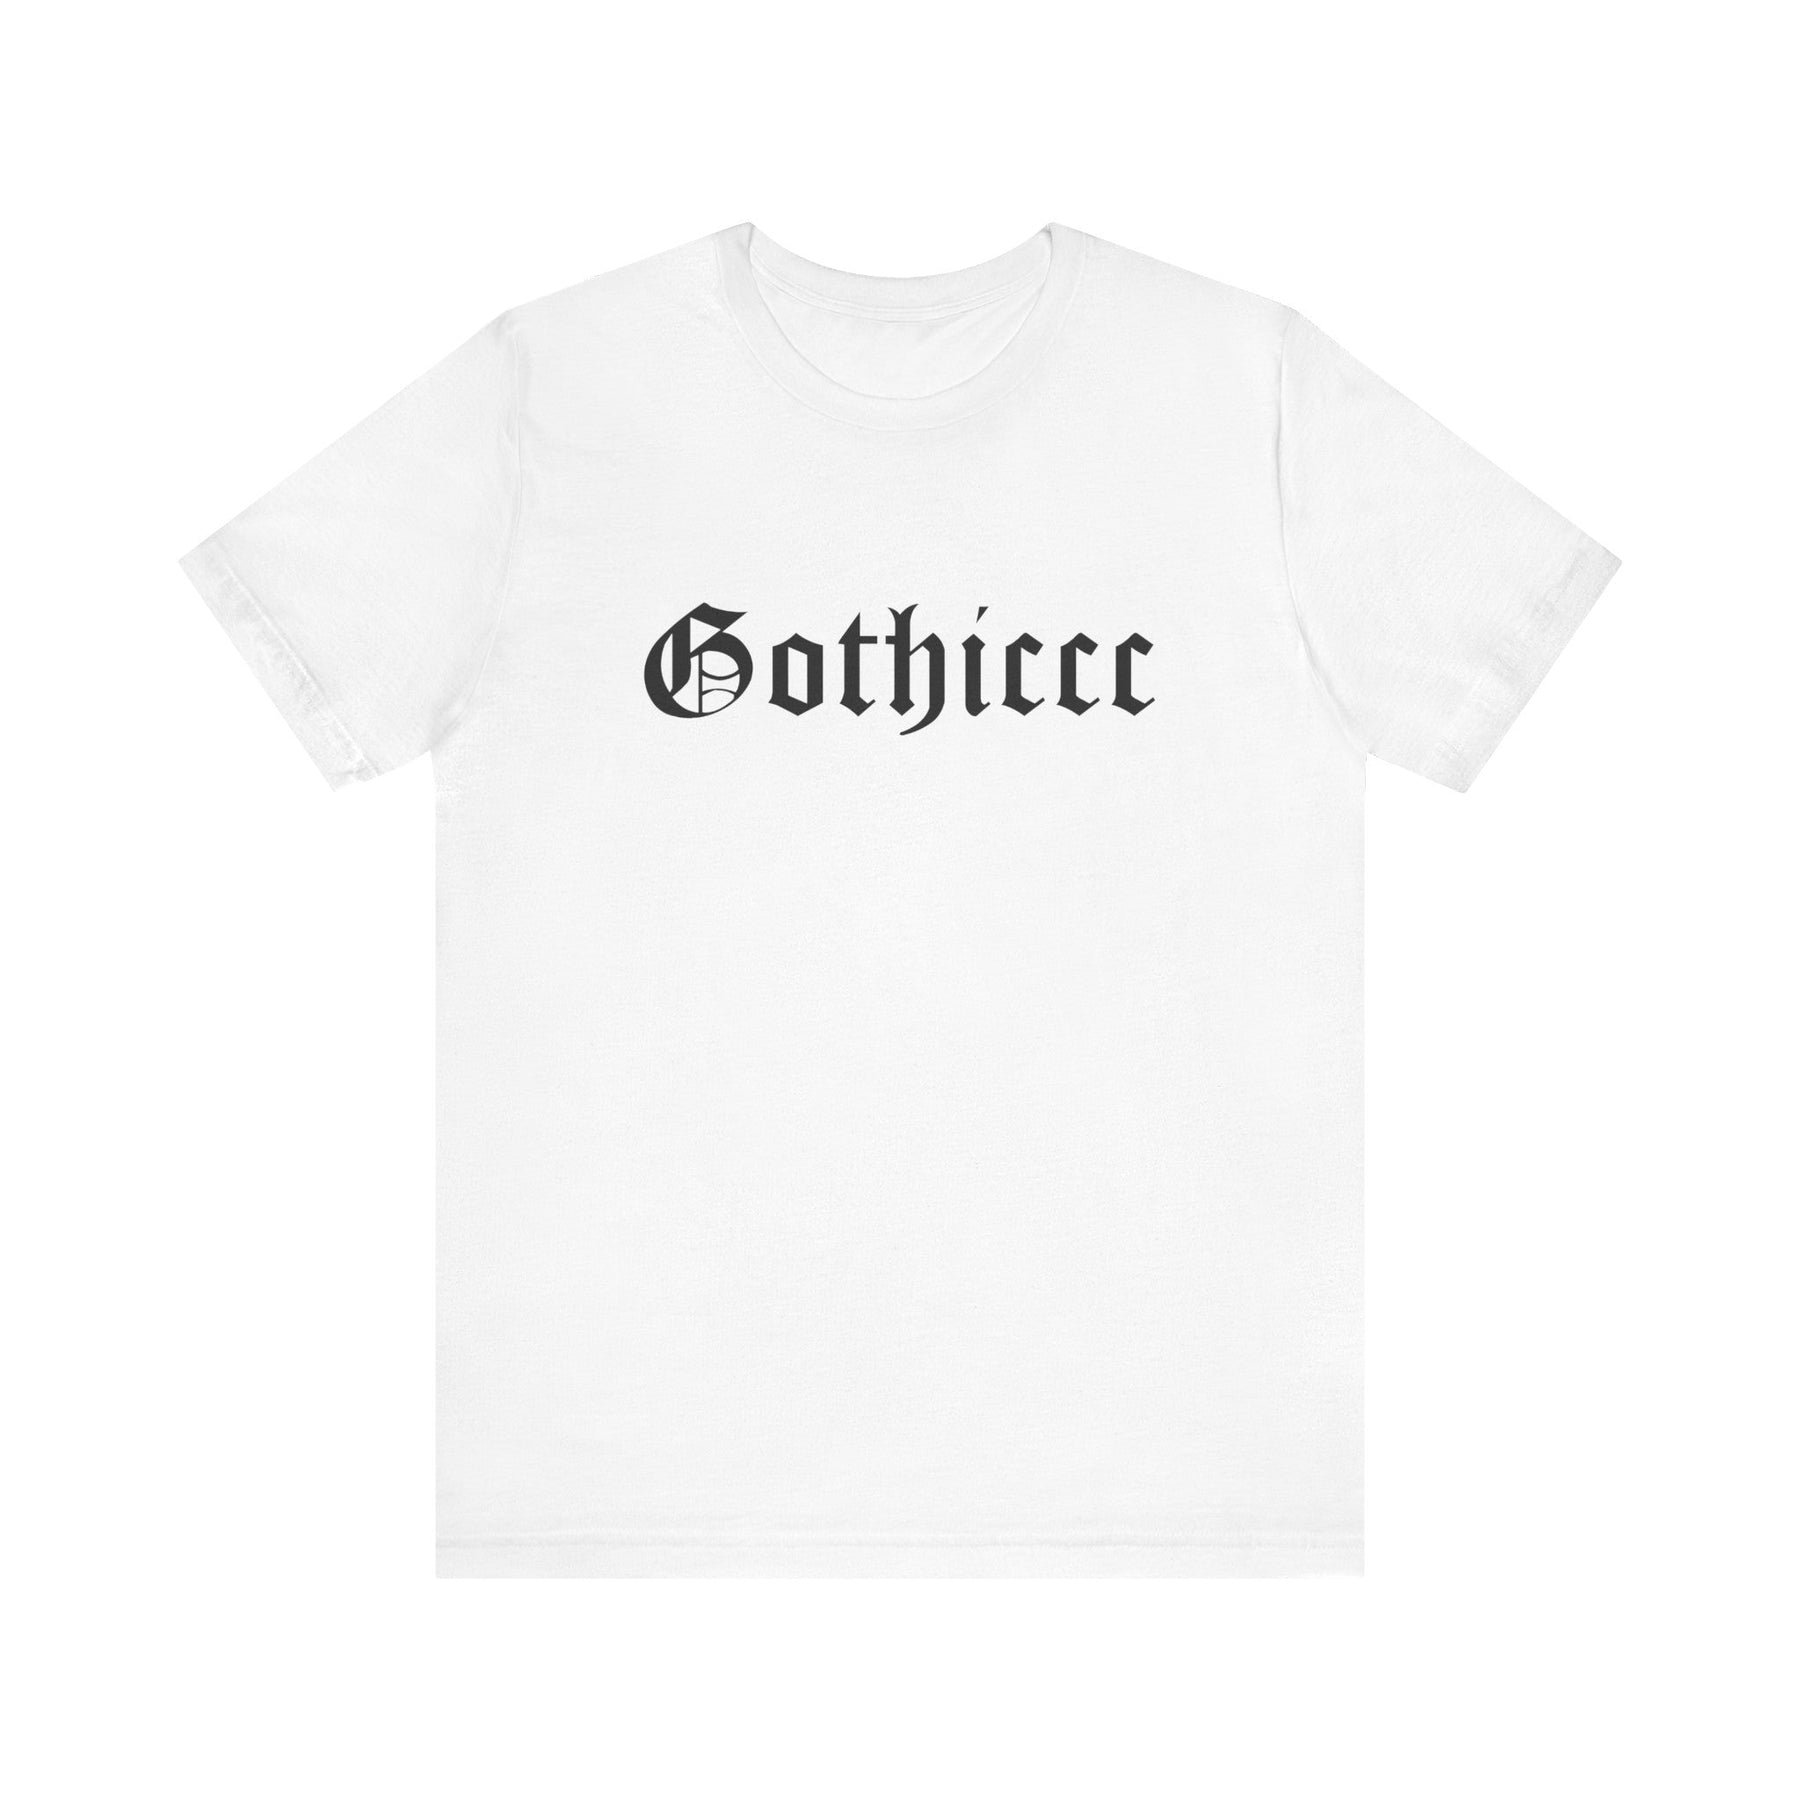 Gothiccc Large Font T - Shirt - Goth Cloth Co.T - Shirt26756217971979983595